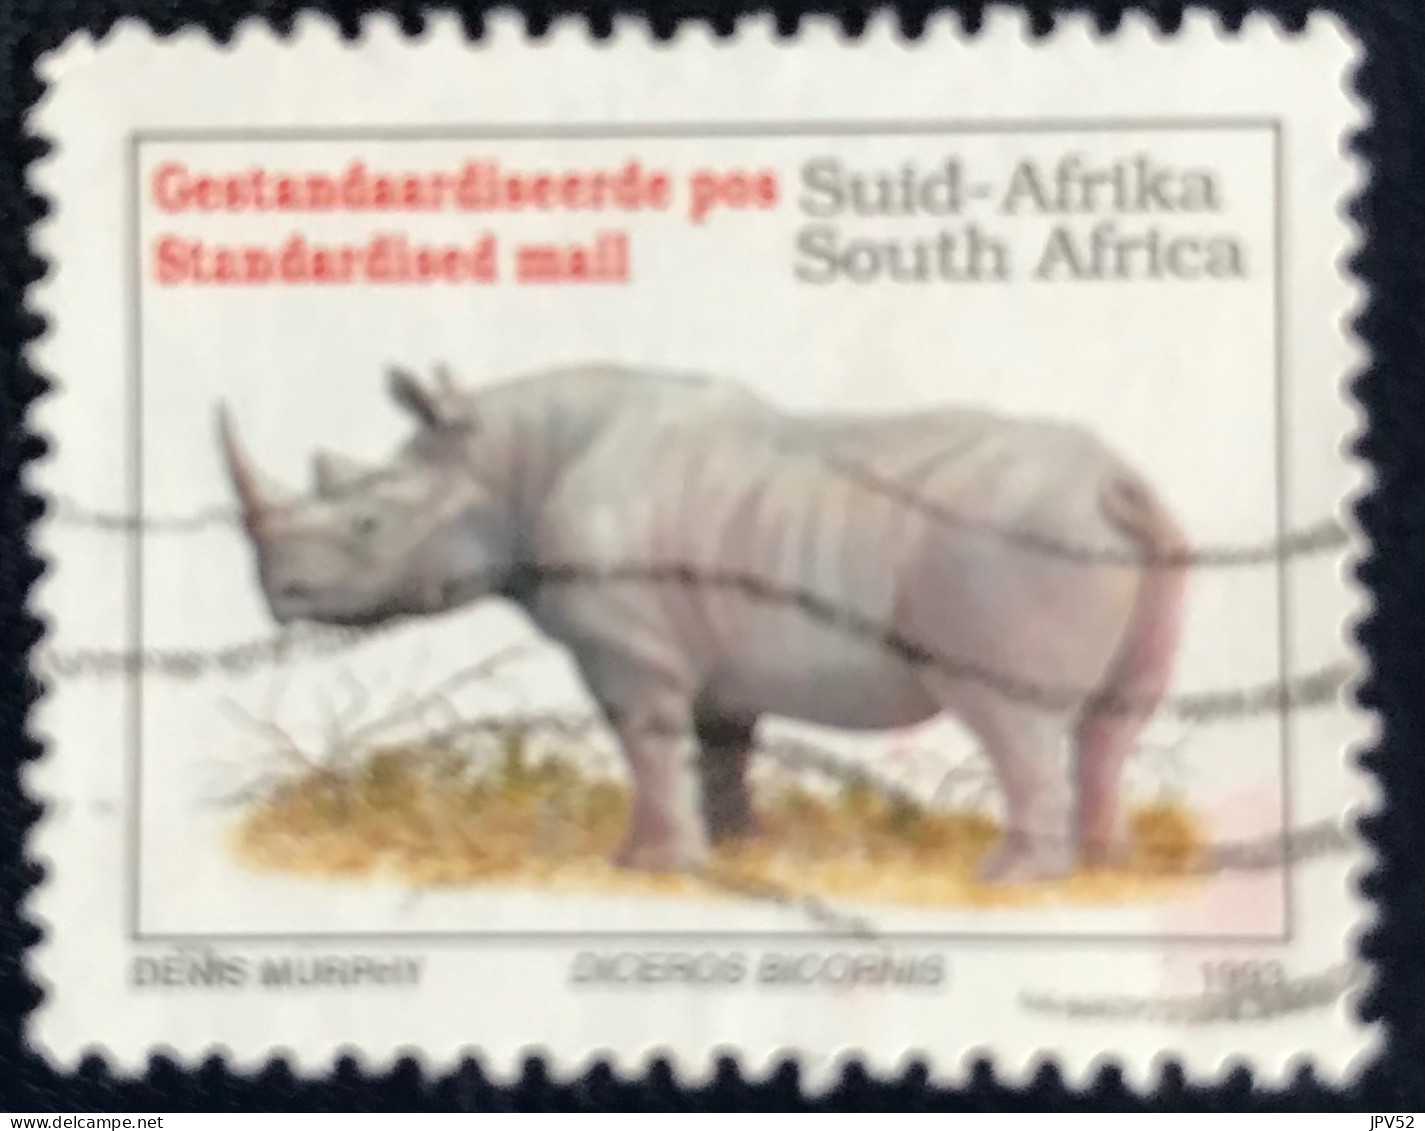 RSA - South Africa - Suid-Afrika  - C18/8 - 1996 - (°)used - Michel 896 - Bedreigde Dieren - Oblitérés